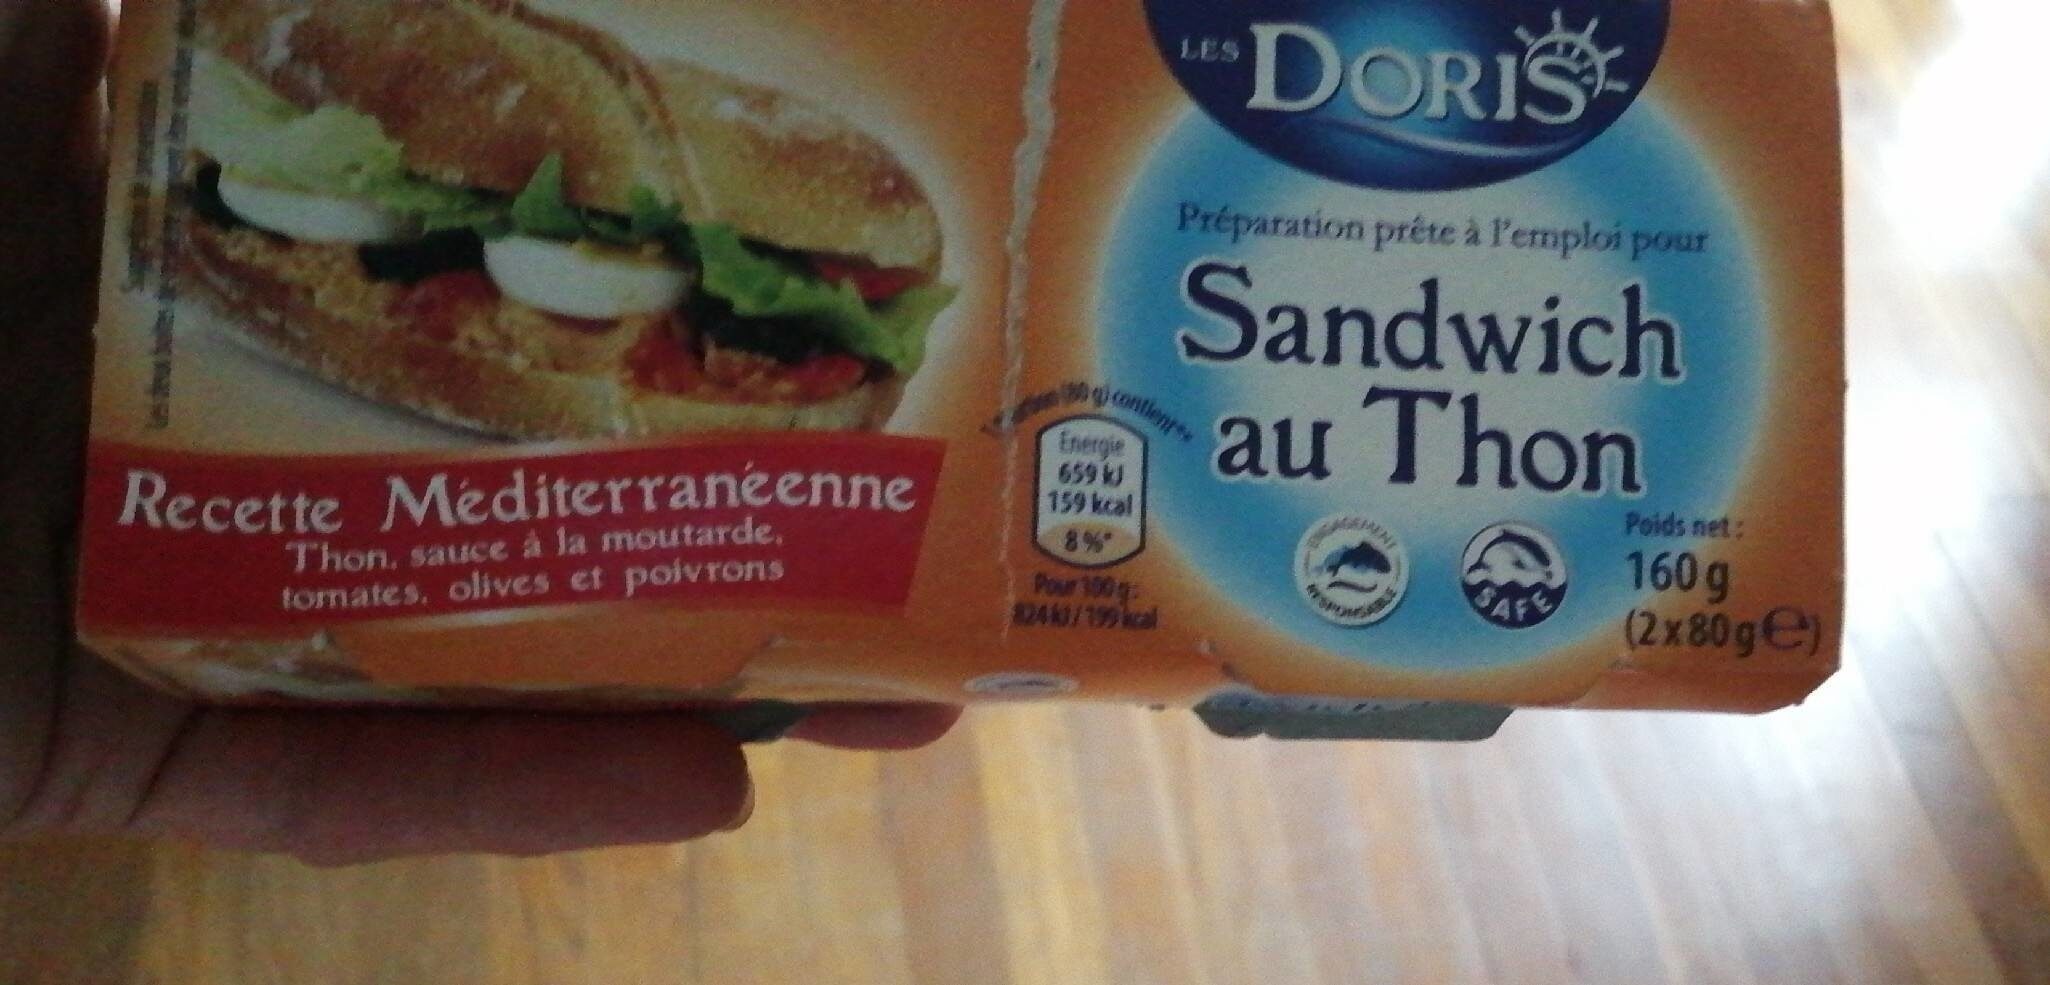 Sandwich au thon - Product - fr